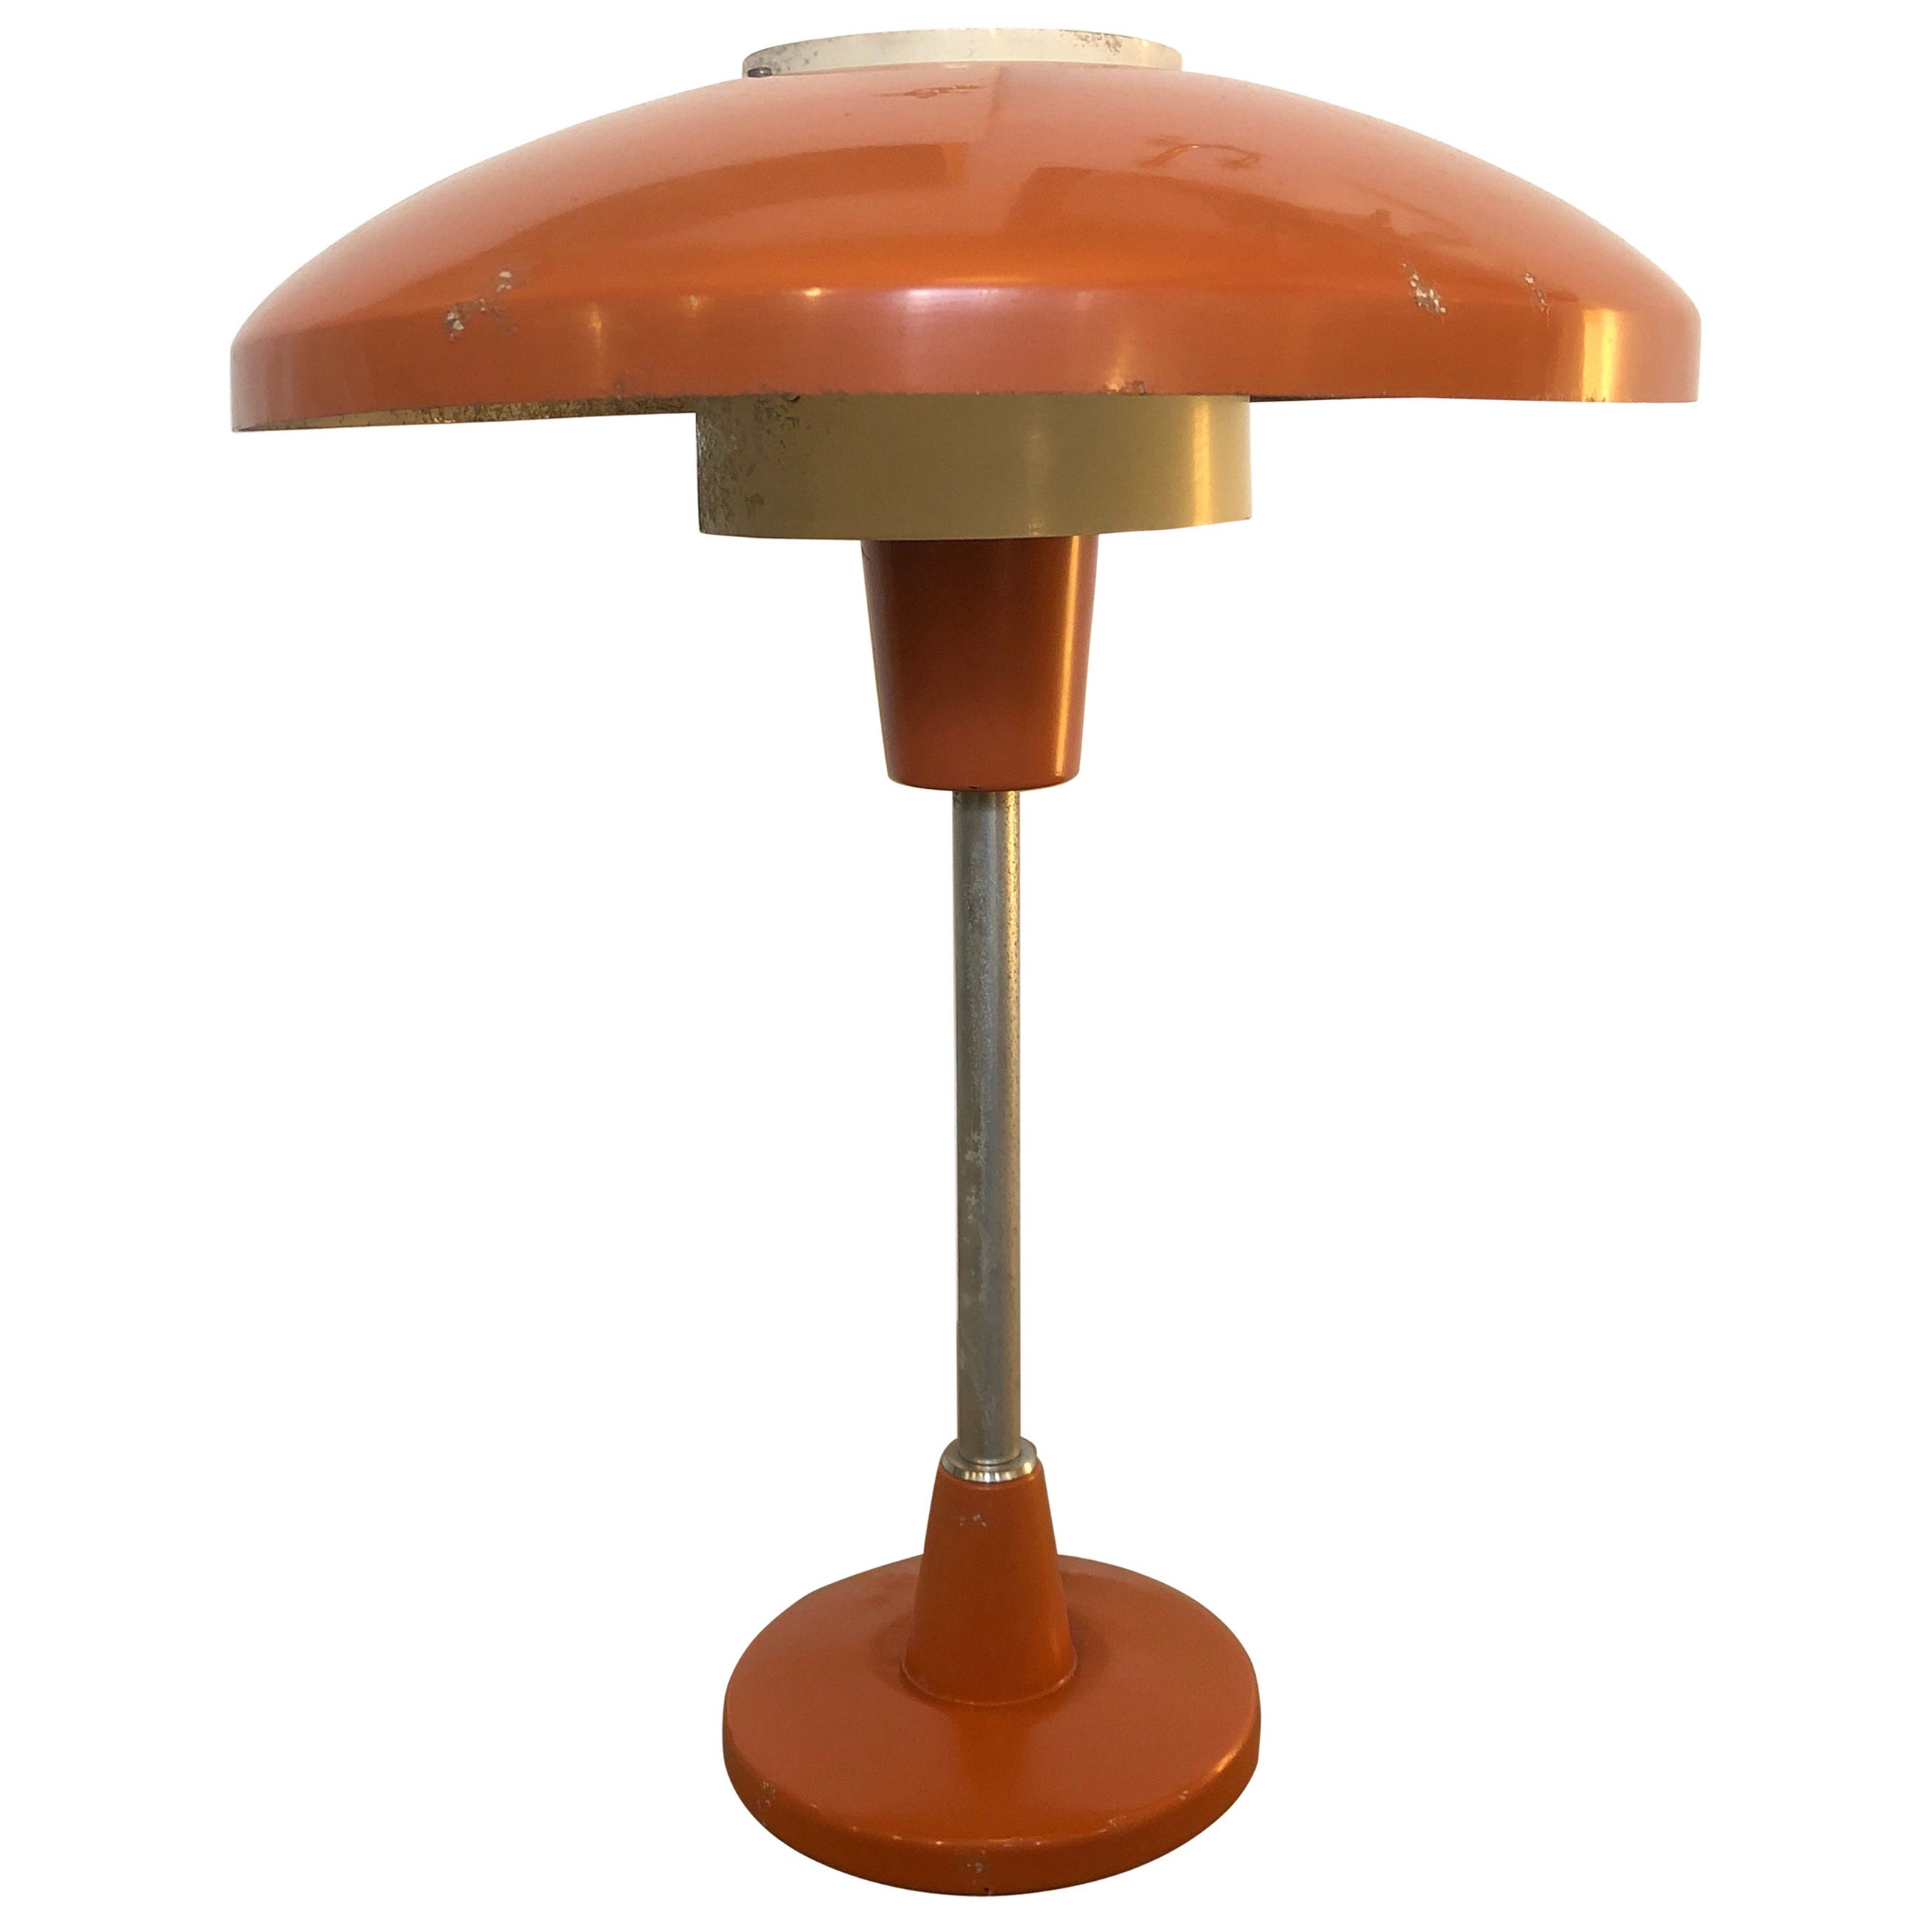 1960s Stilnovo Mod. 8022 Mid-Century Modern Orange and White Table Lamp